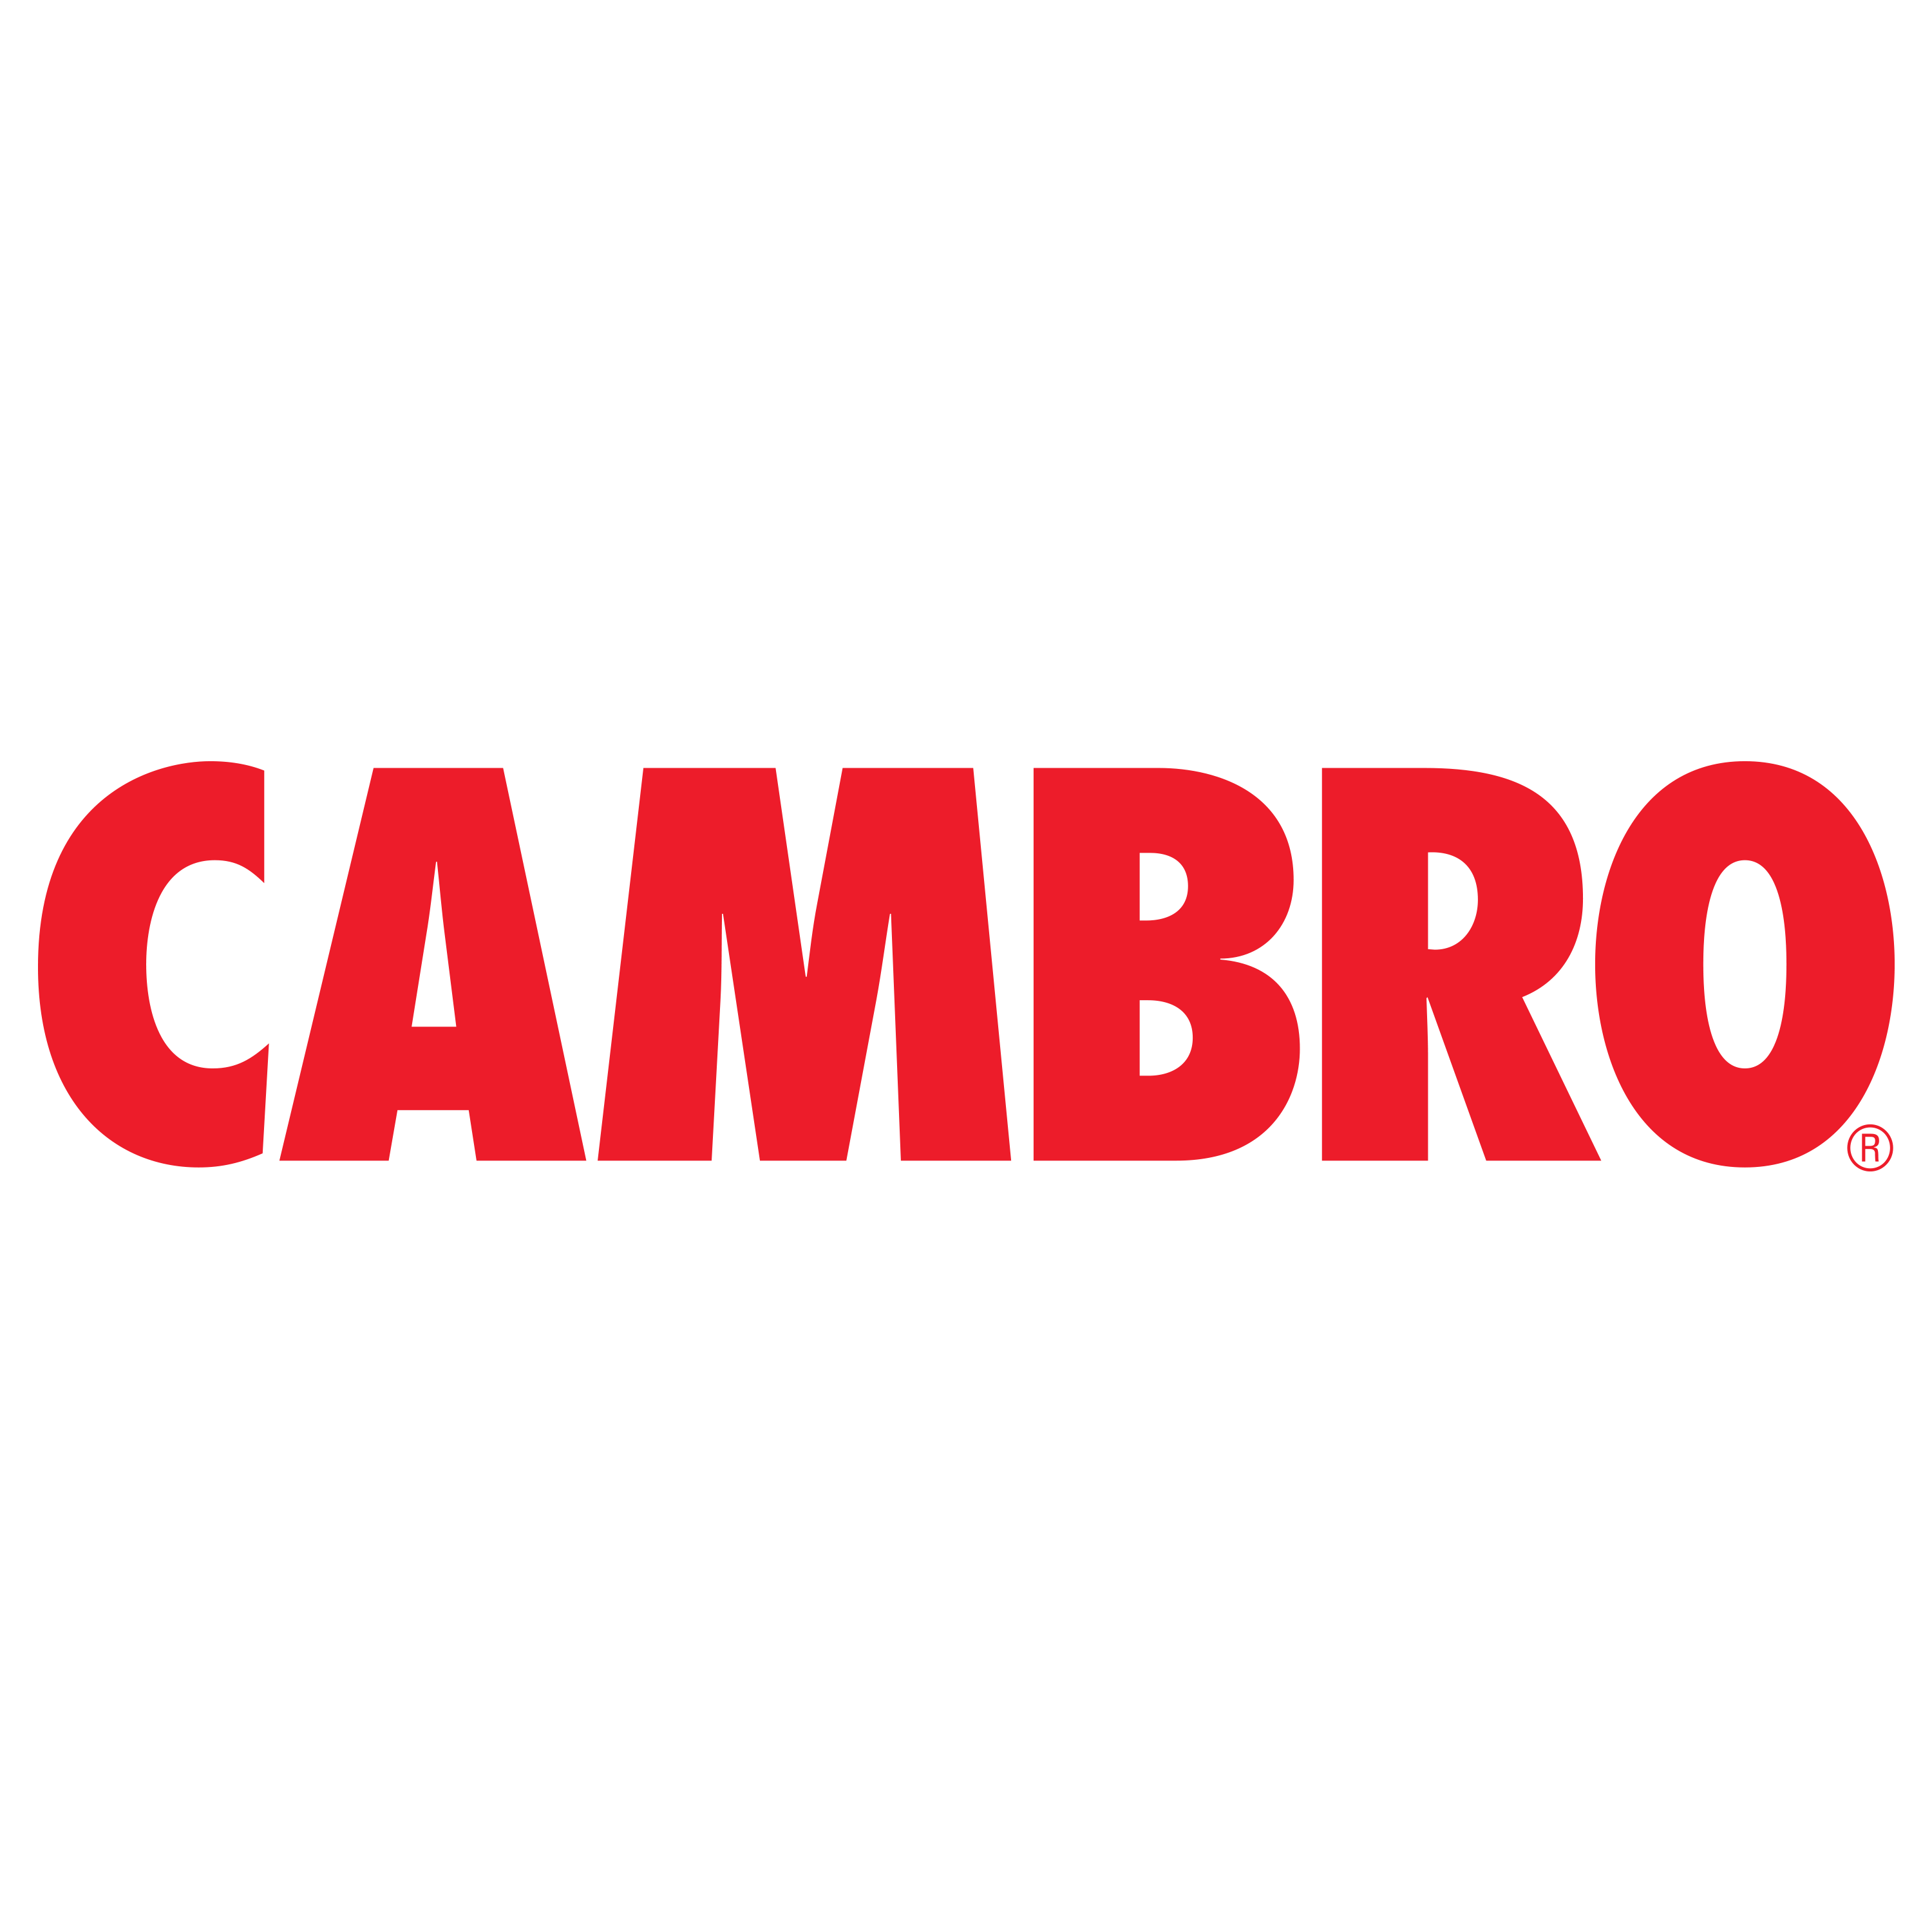 CAMBRO Presswerk Köngen GmbH